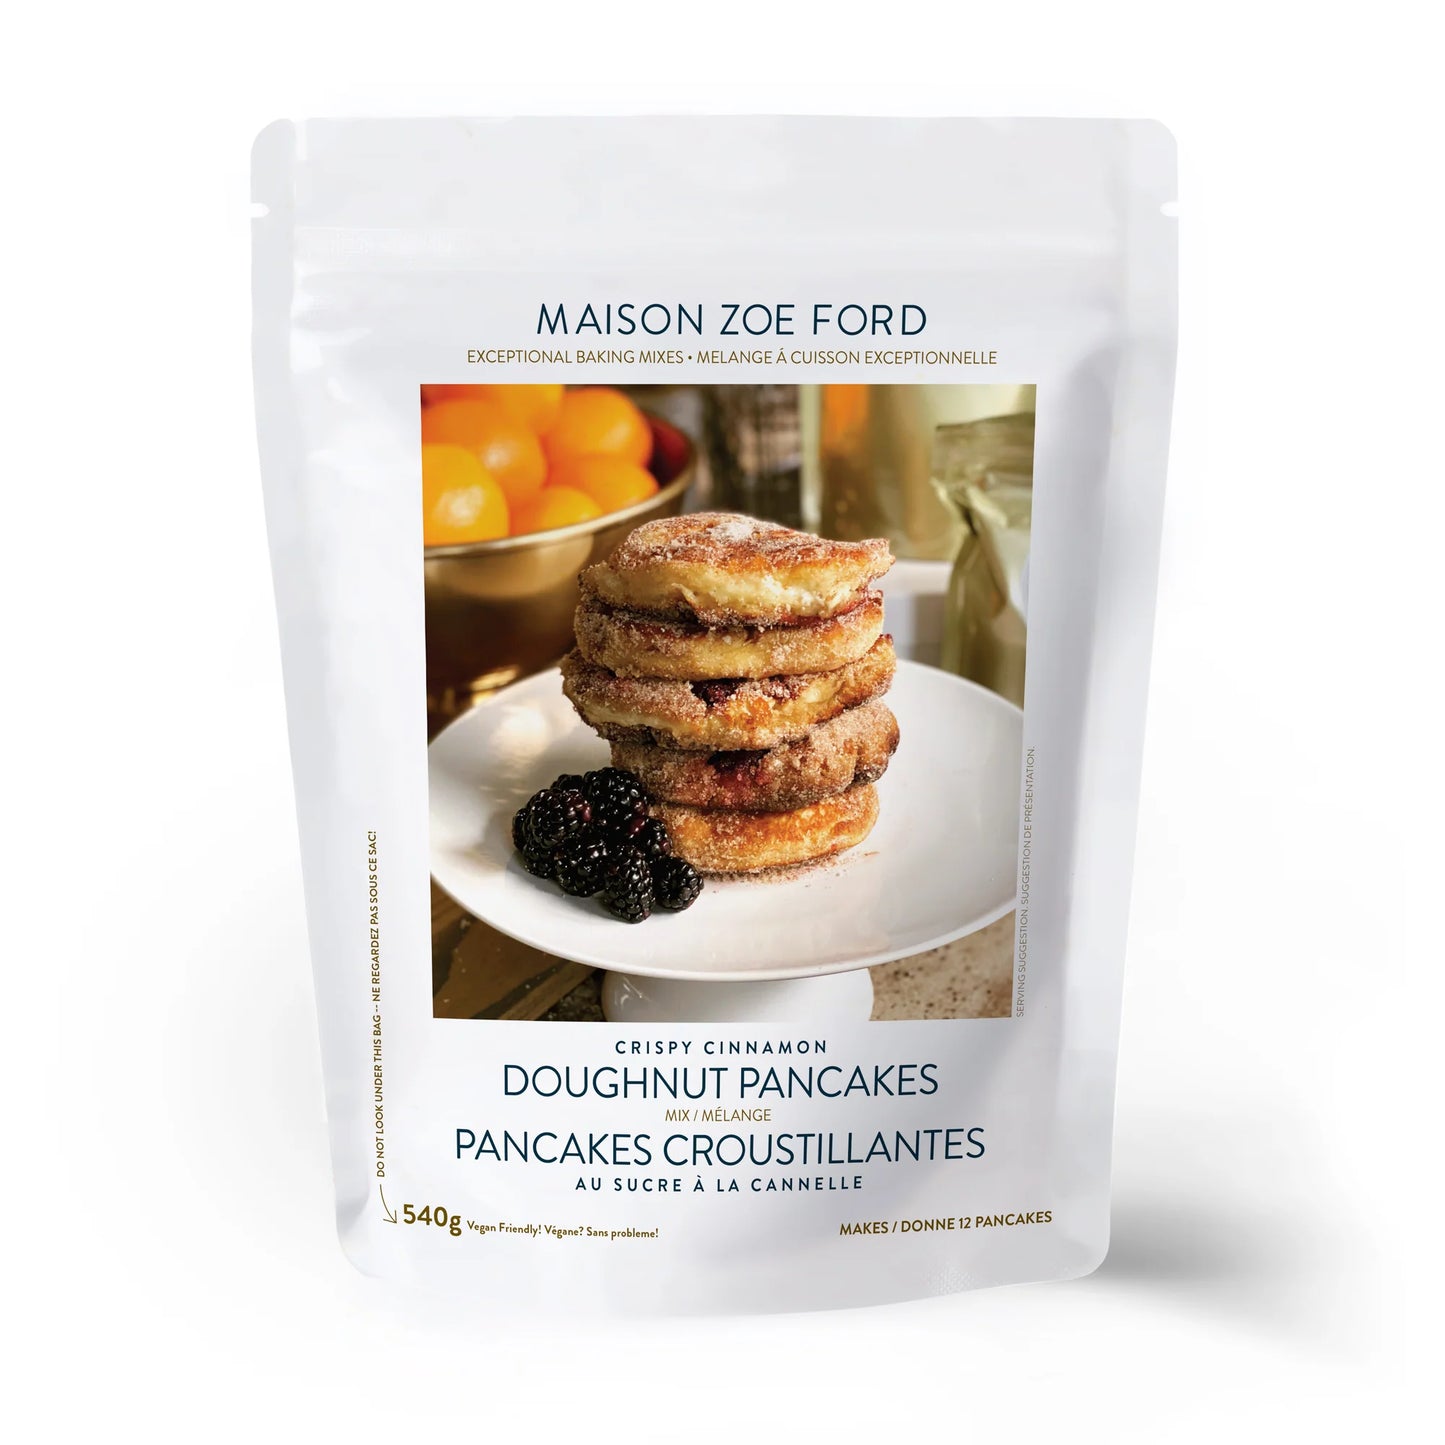 Maison Zoe Ford Crispy Cinnamon Doughnut Pancake Mix!